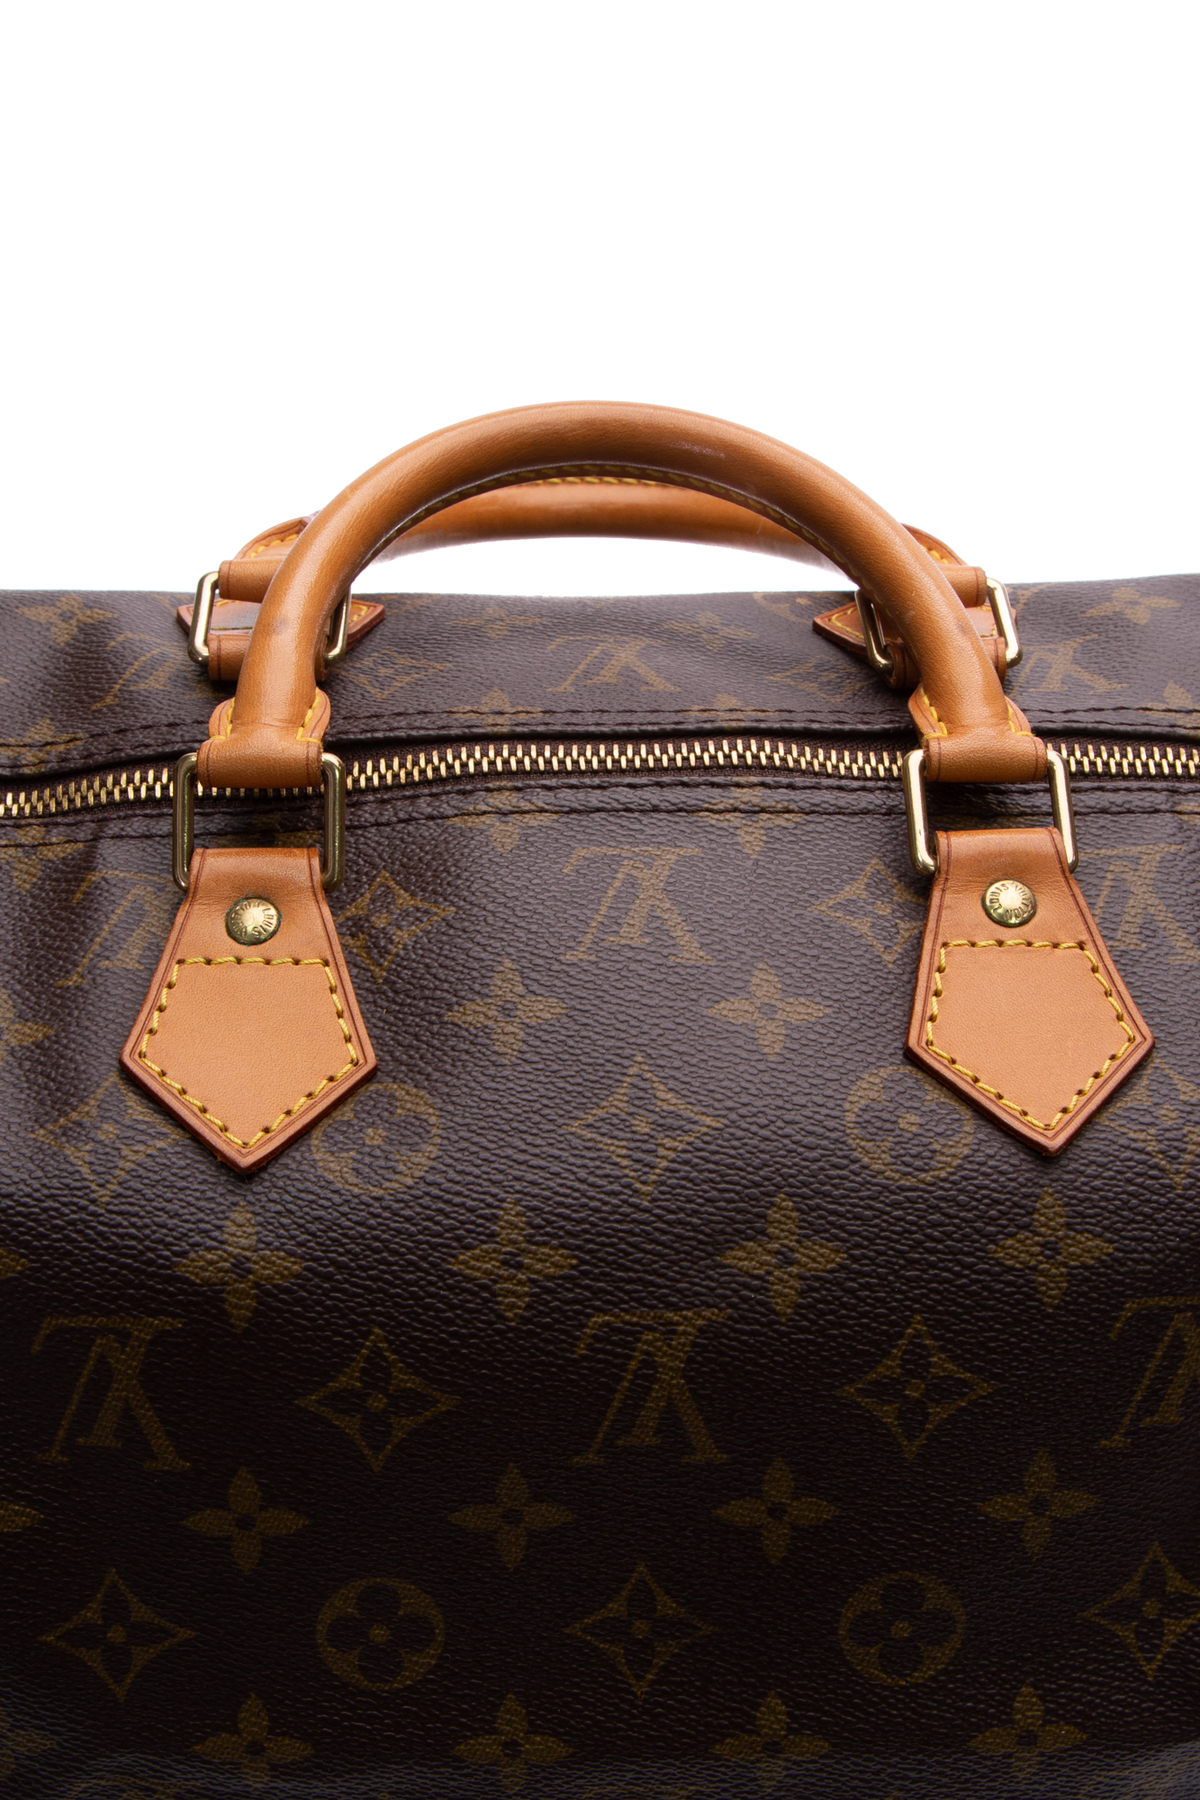 Vintage Louis Vuitton Speedy 40 handbag